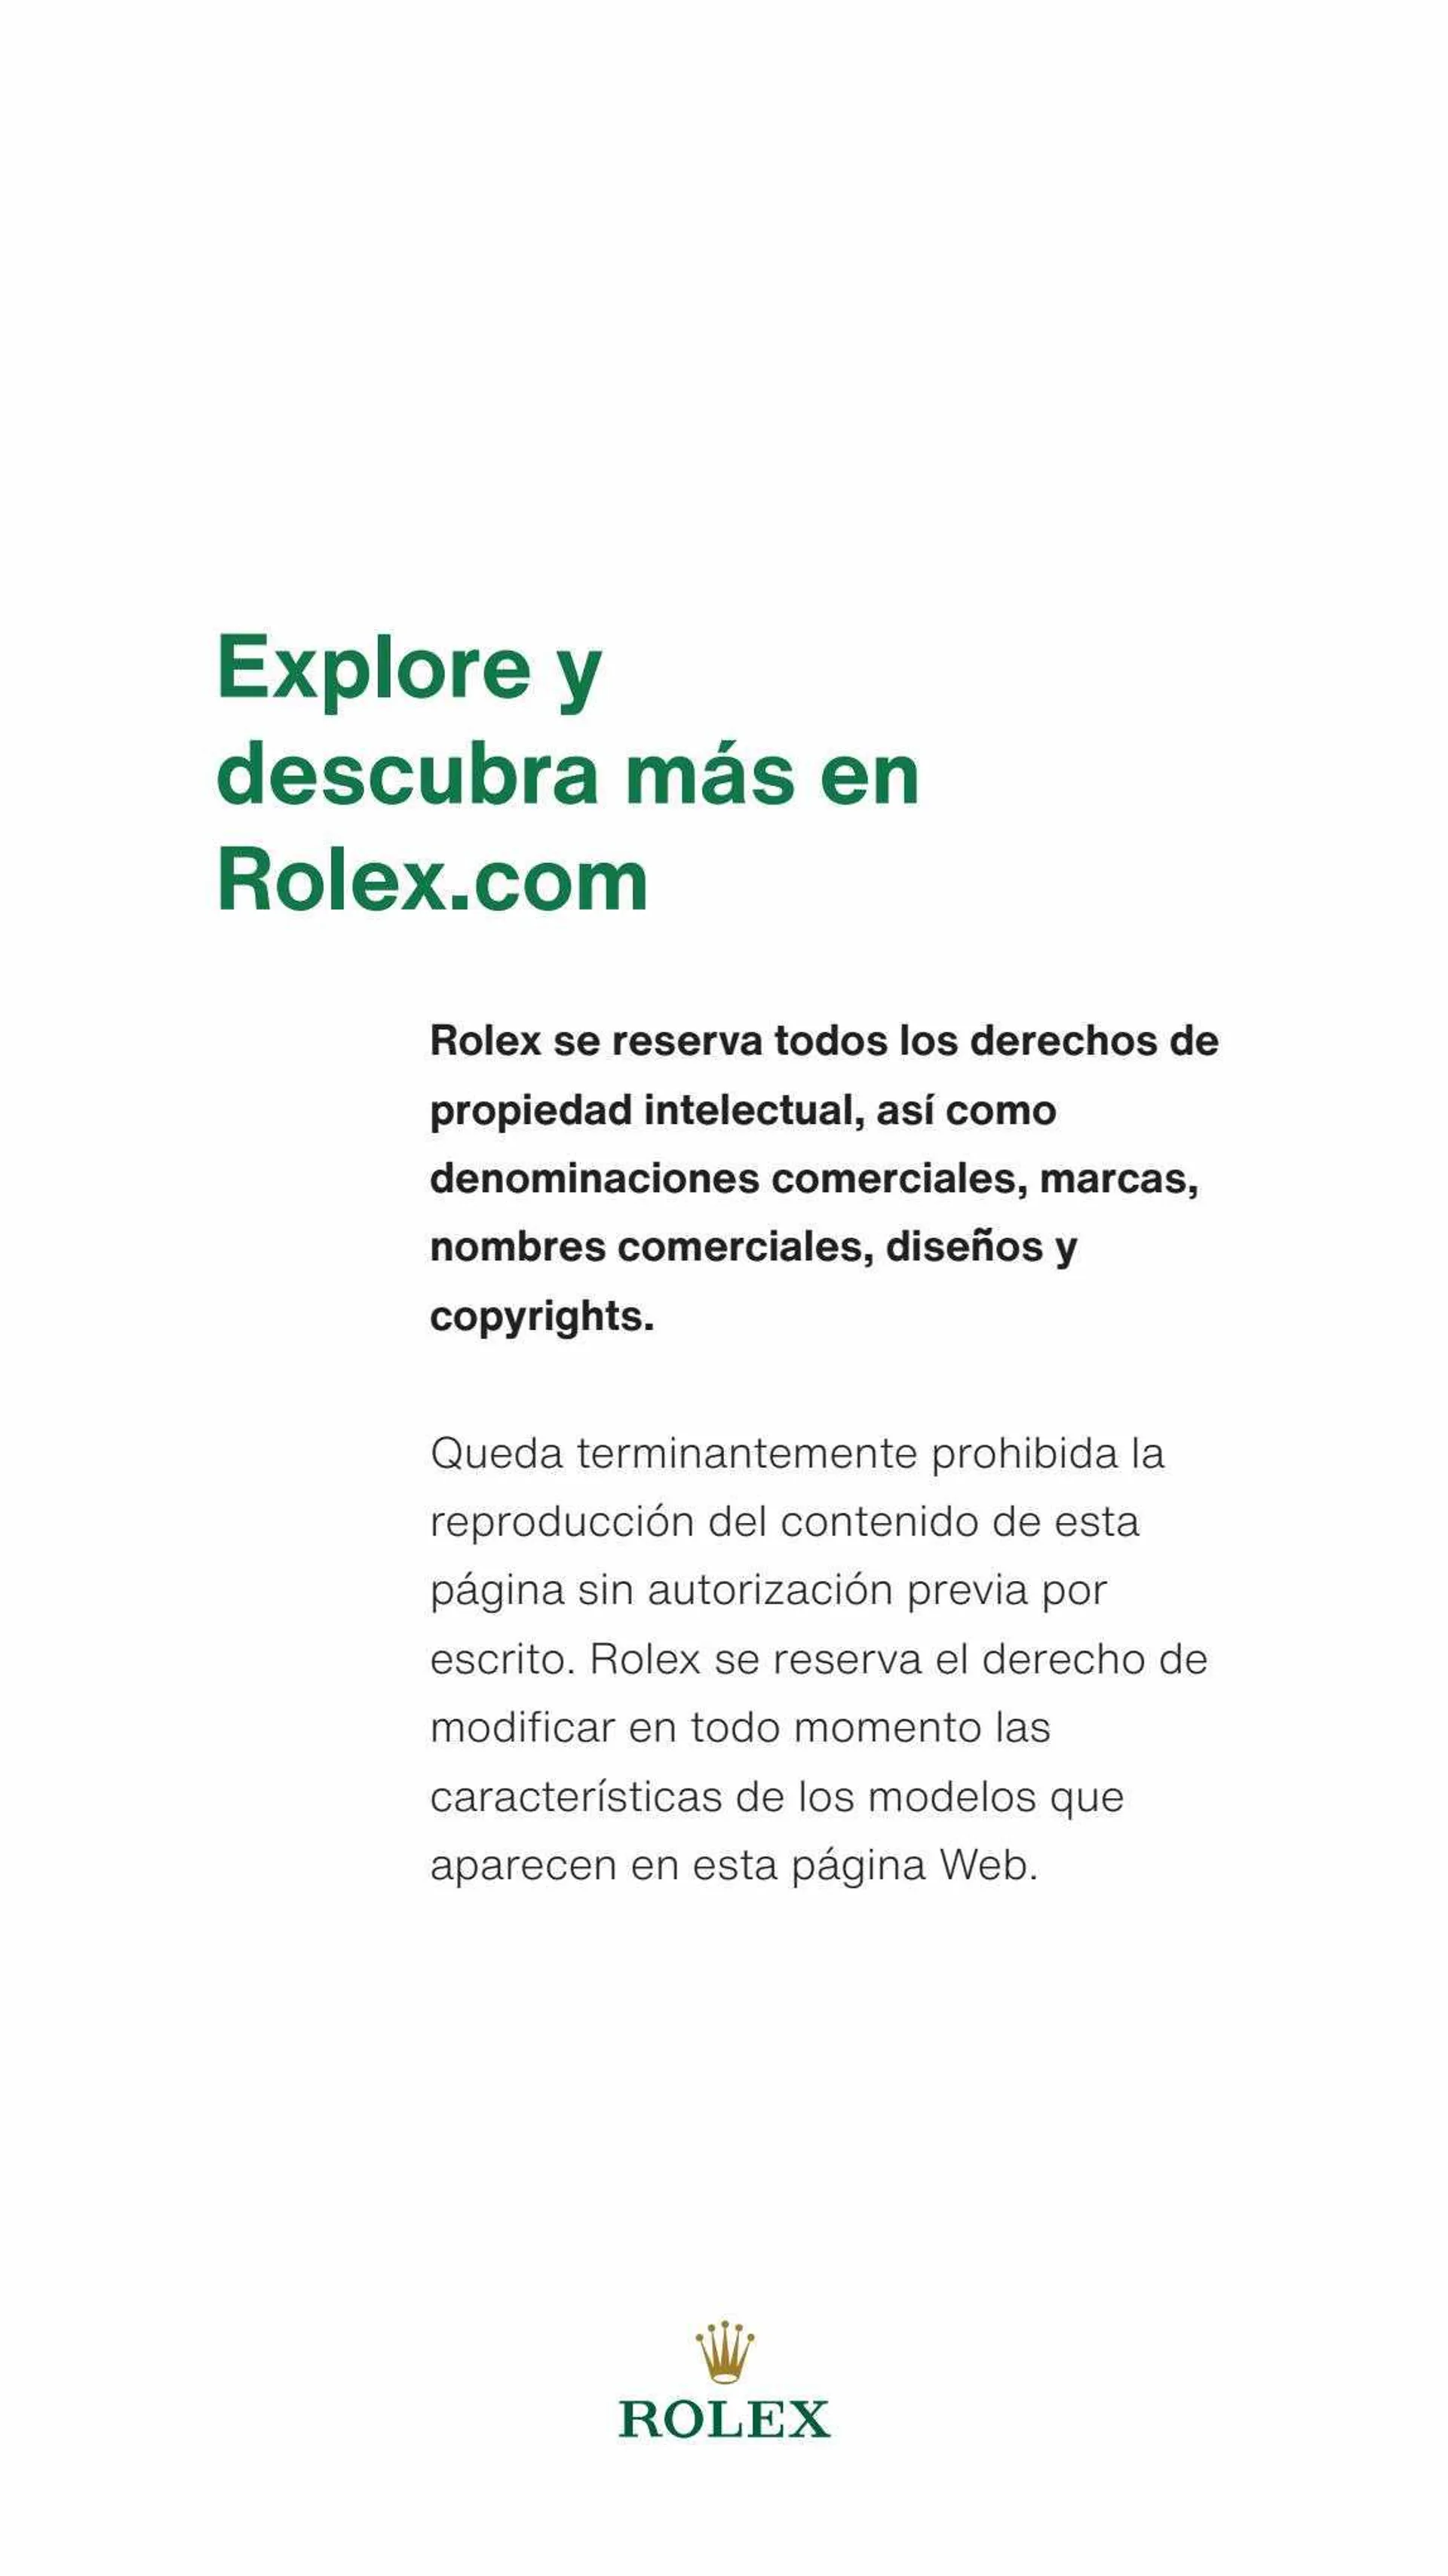 Rolex Folleto - 11